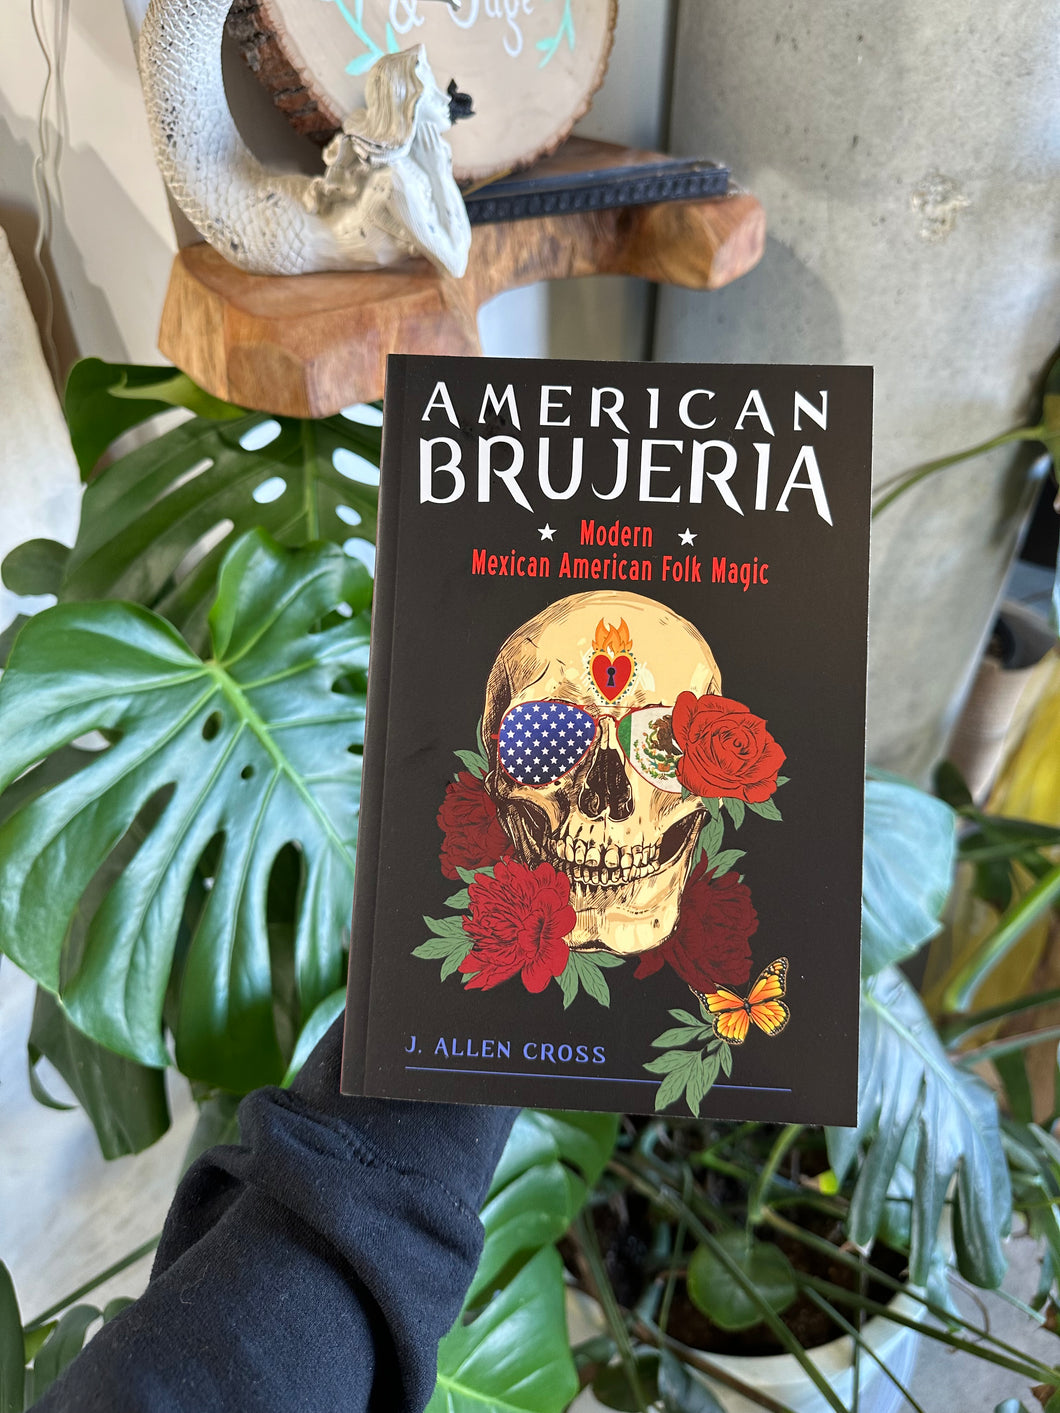 American Brujeria: Modern Mexican American Folk Magic Paperback by J. Allen Cross